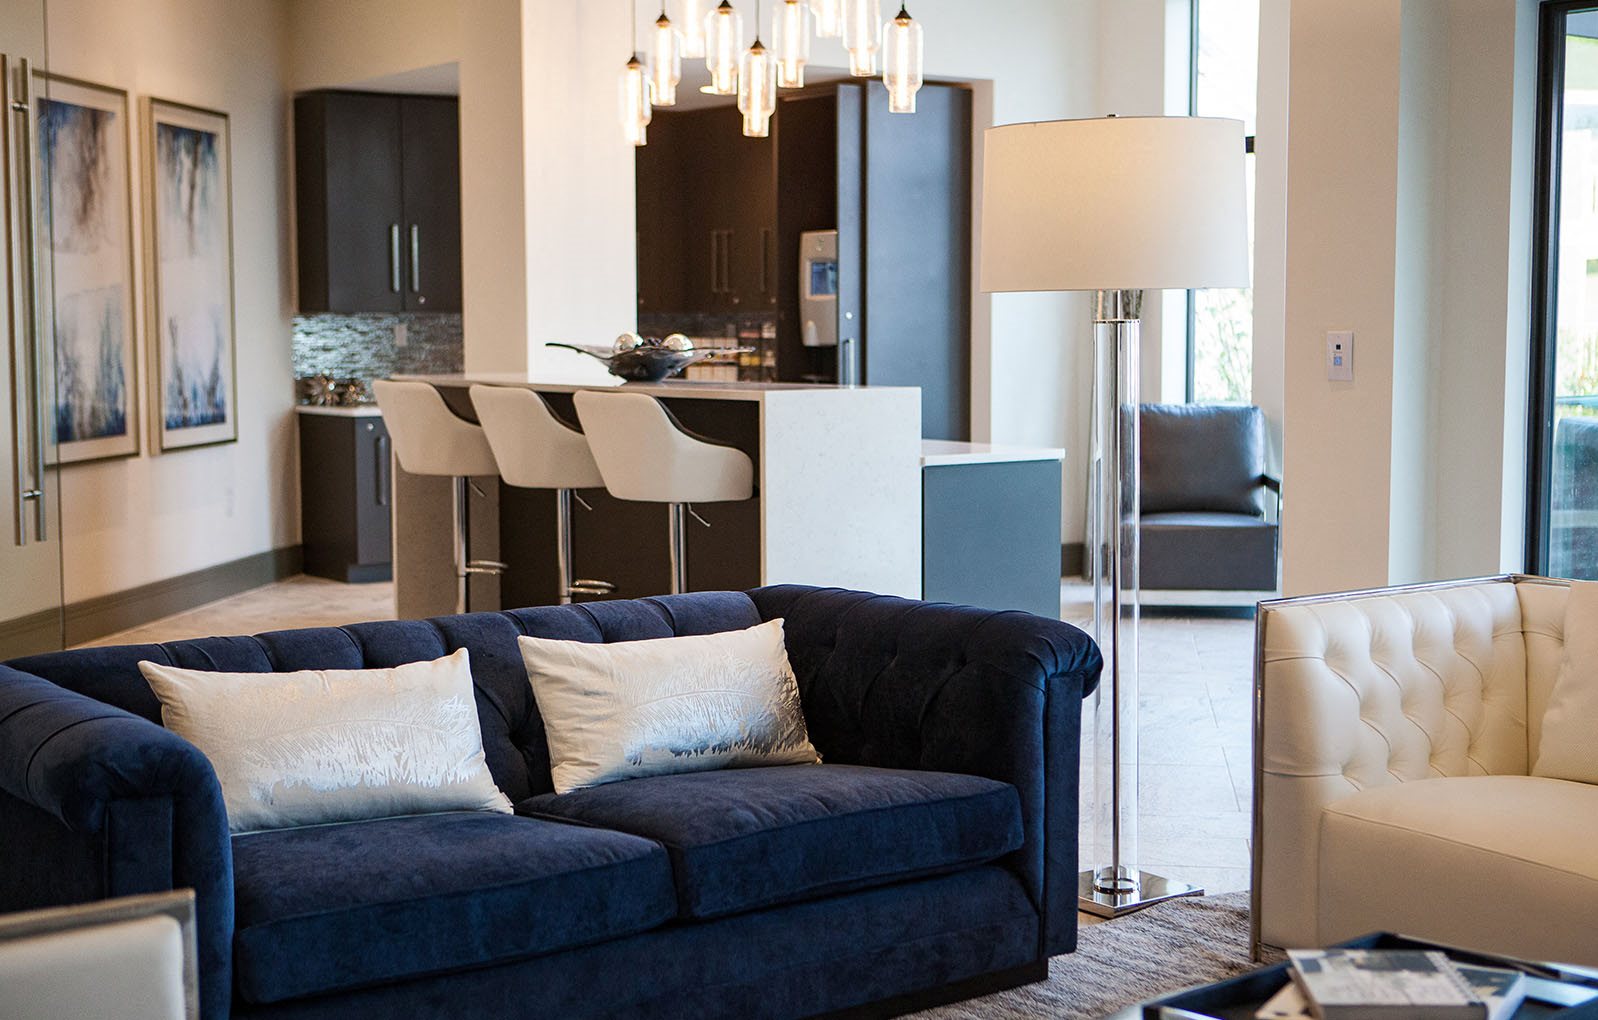 Modern Anson Park Apartments Reviews for Simple Design